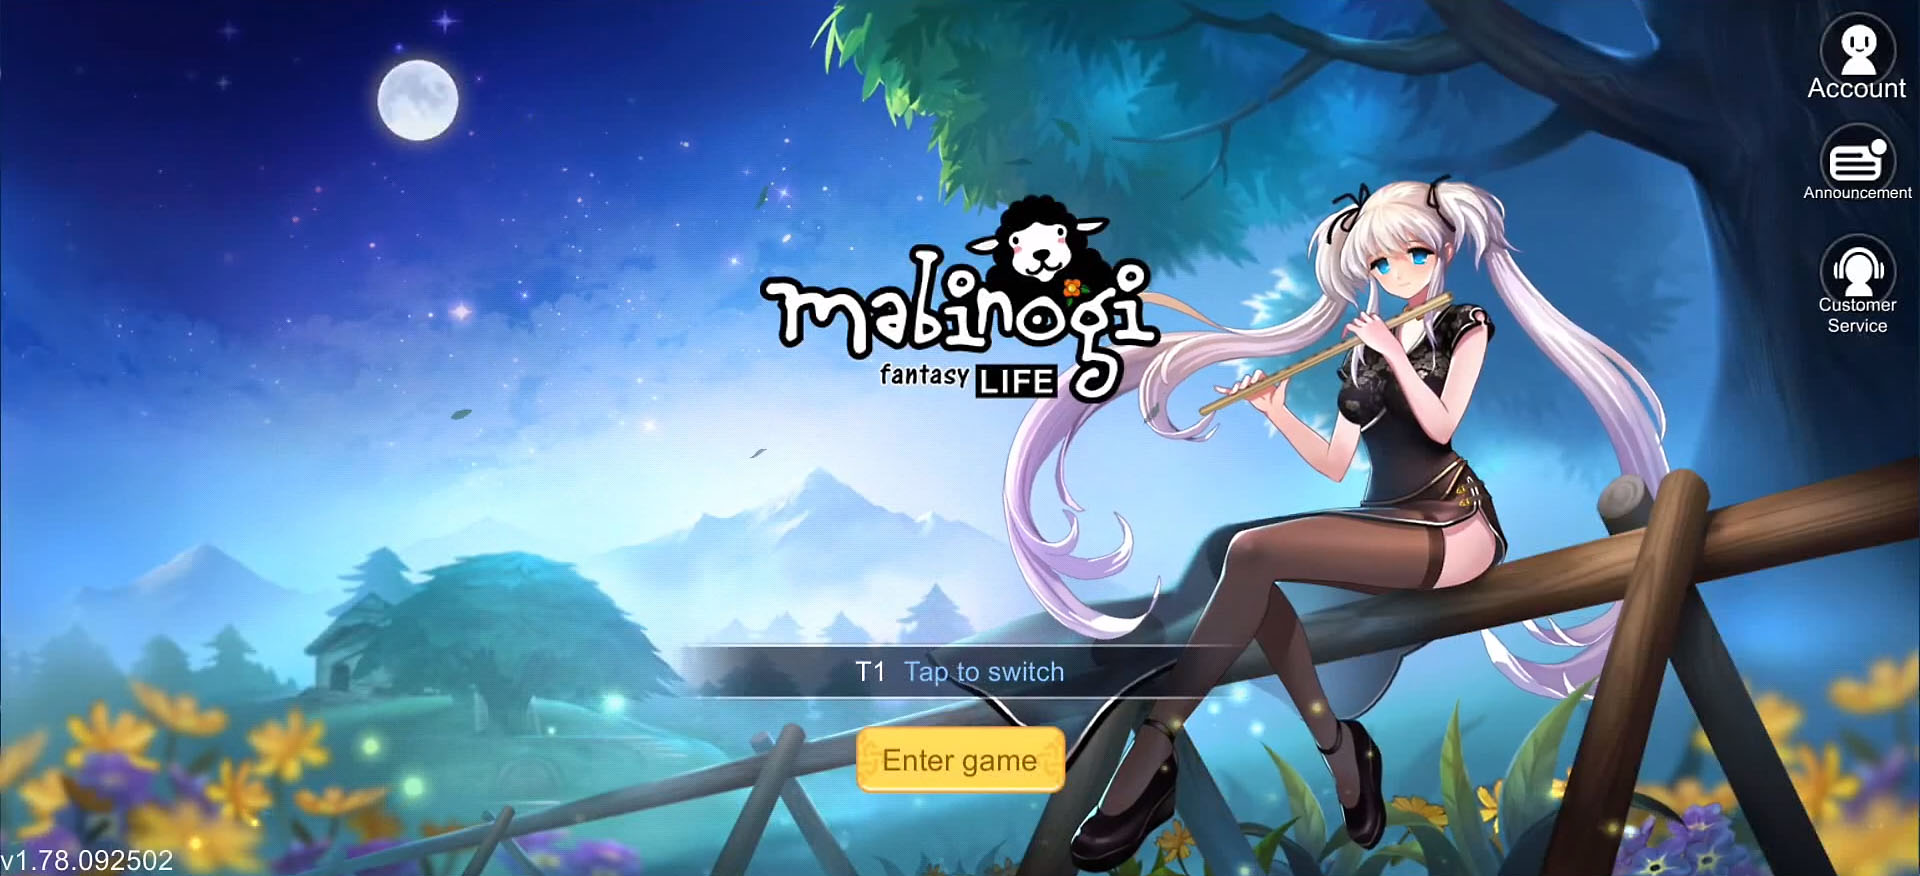 Mabinogi-Fantasy Life screenshot 1